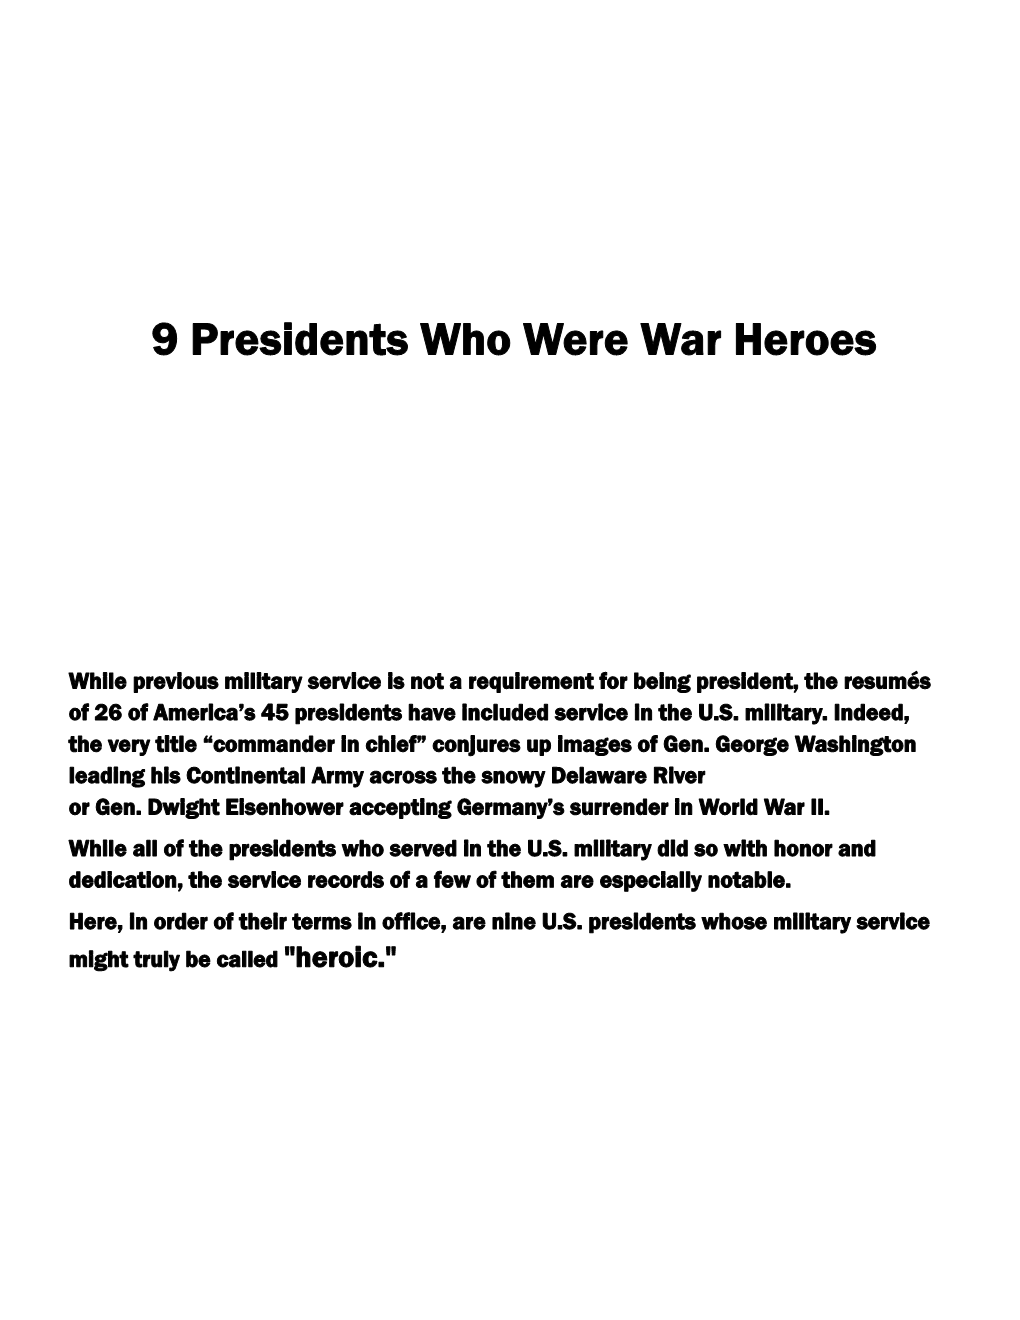 9 War Hero Presidents